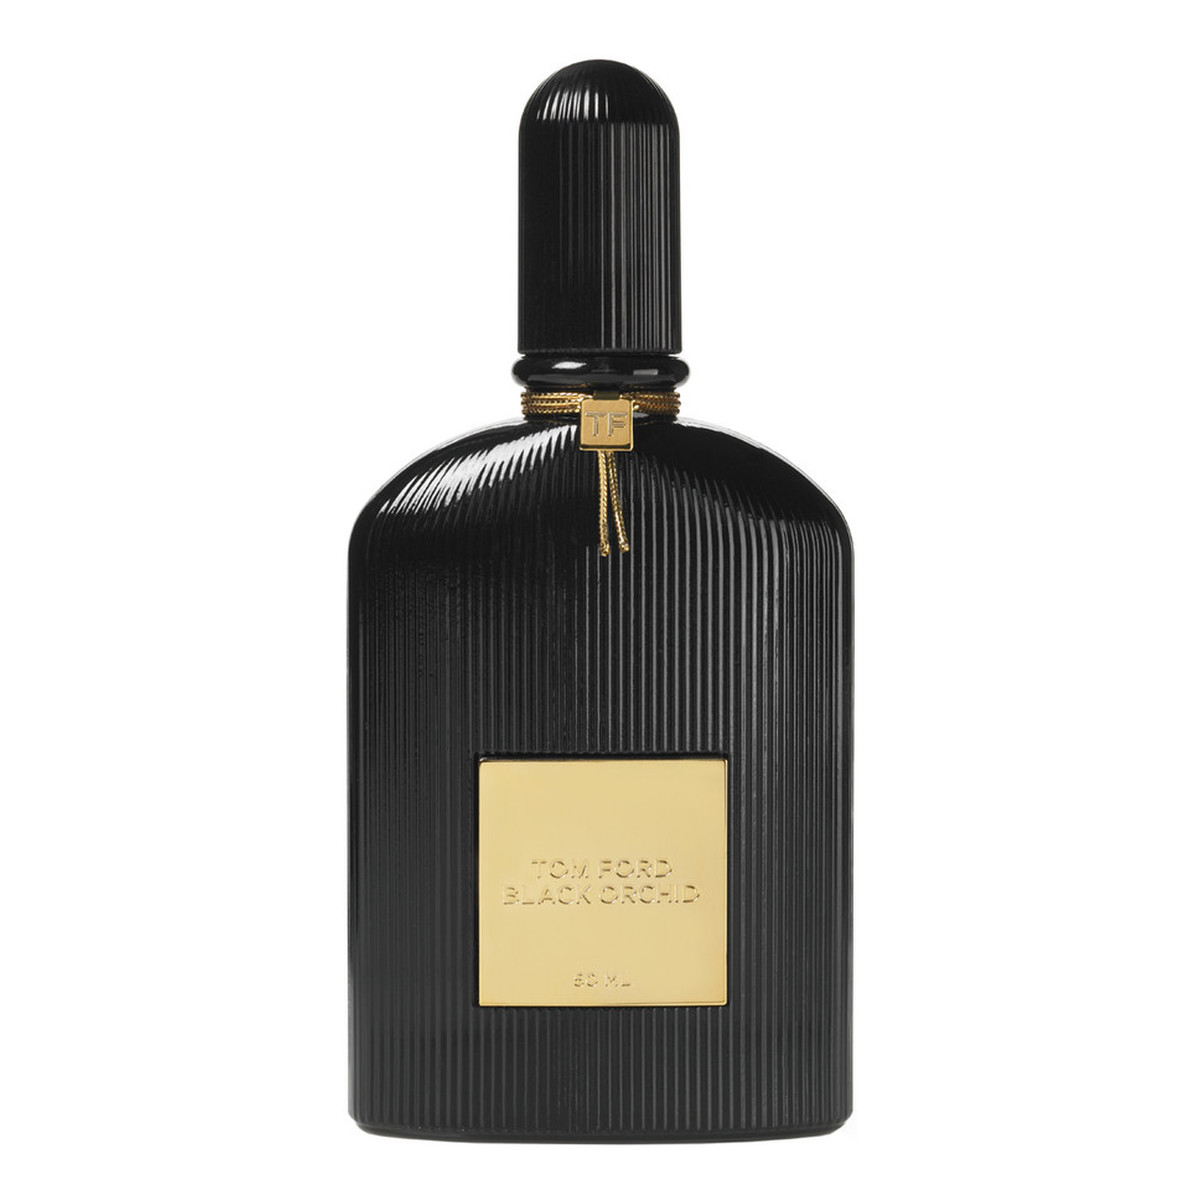 Tom Ford Black Orchid woda perfumowana 50ml